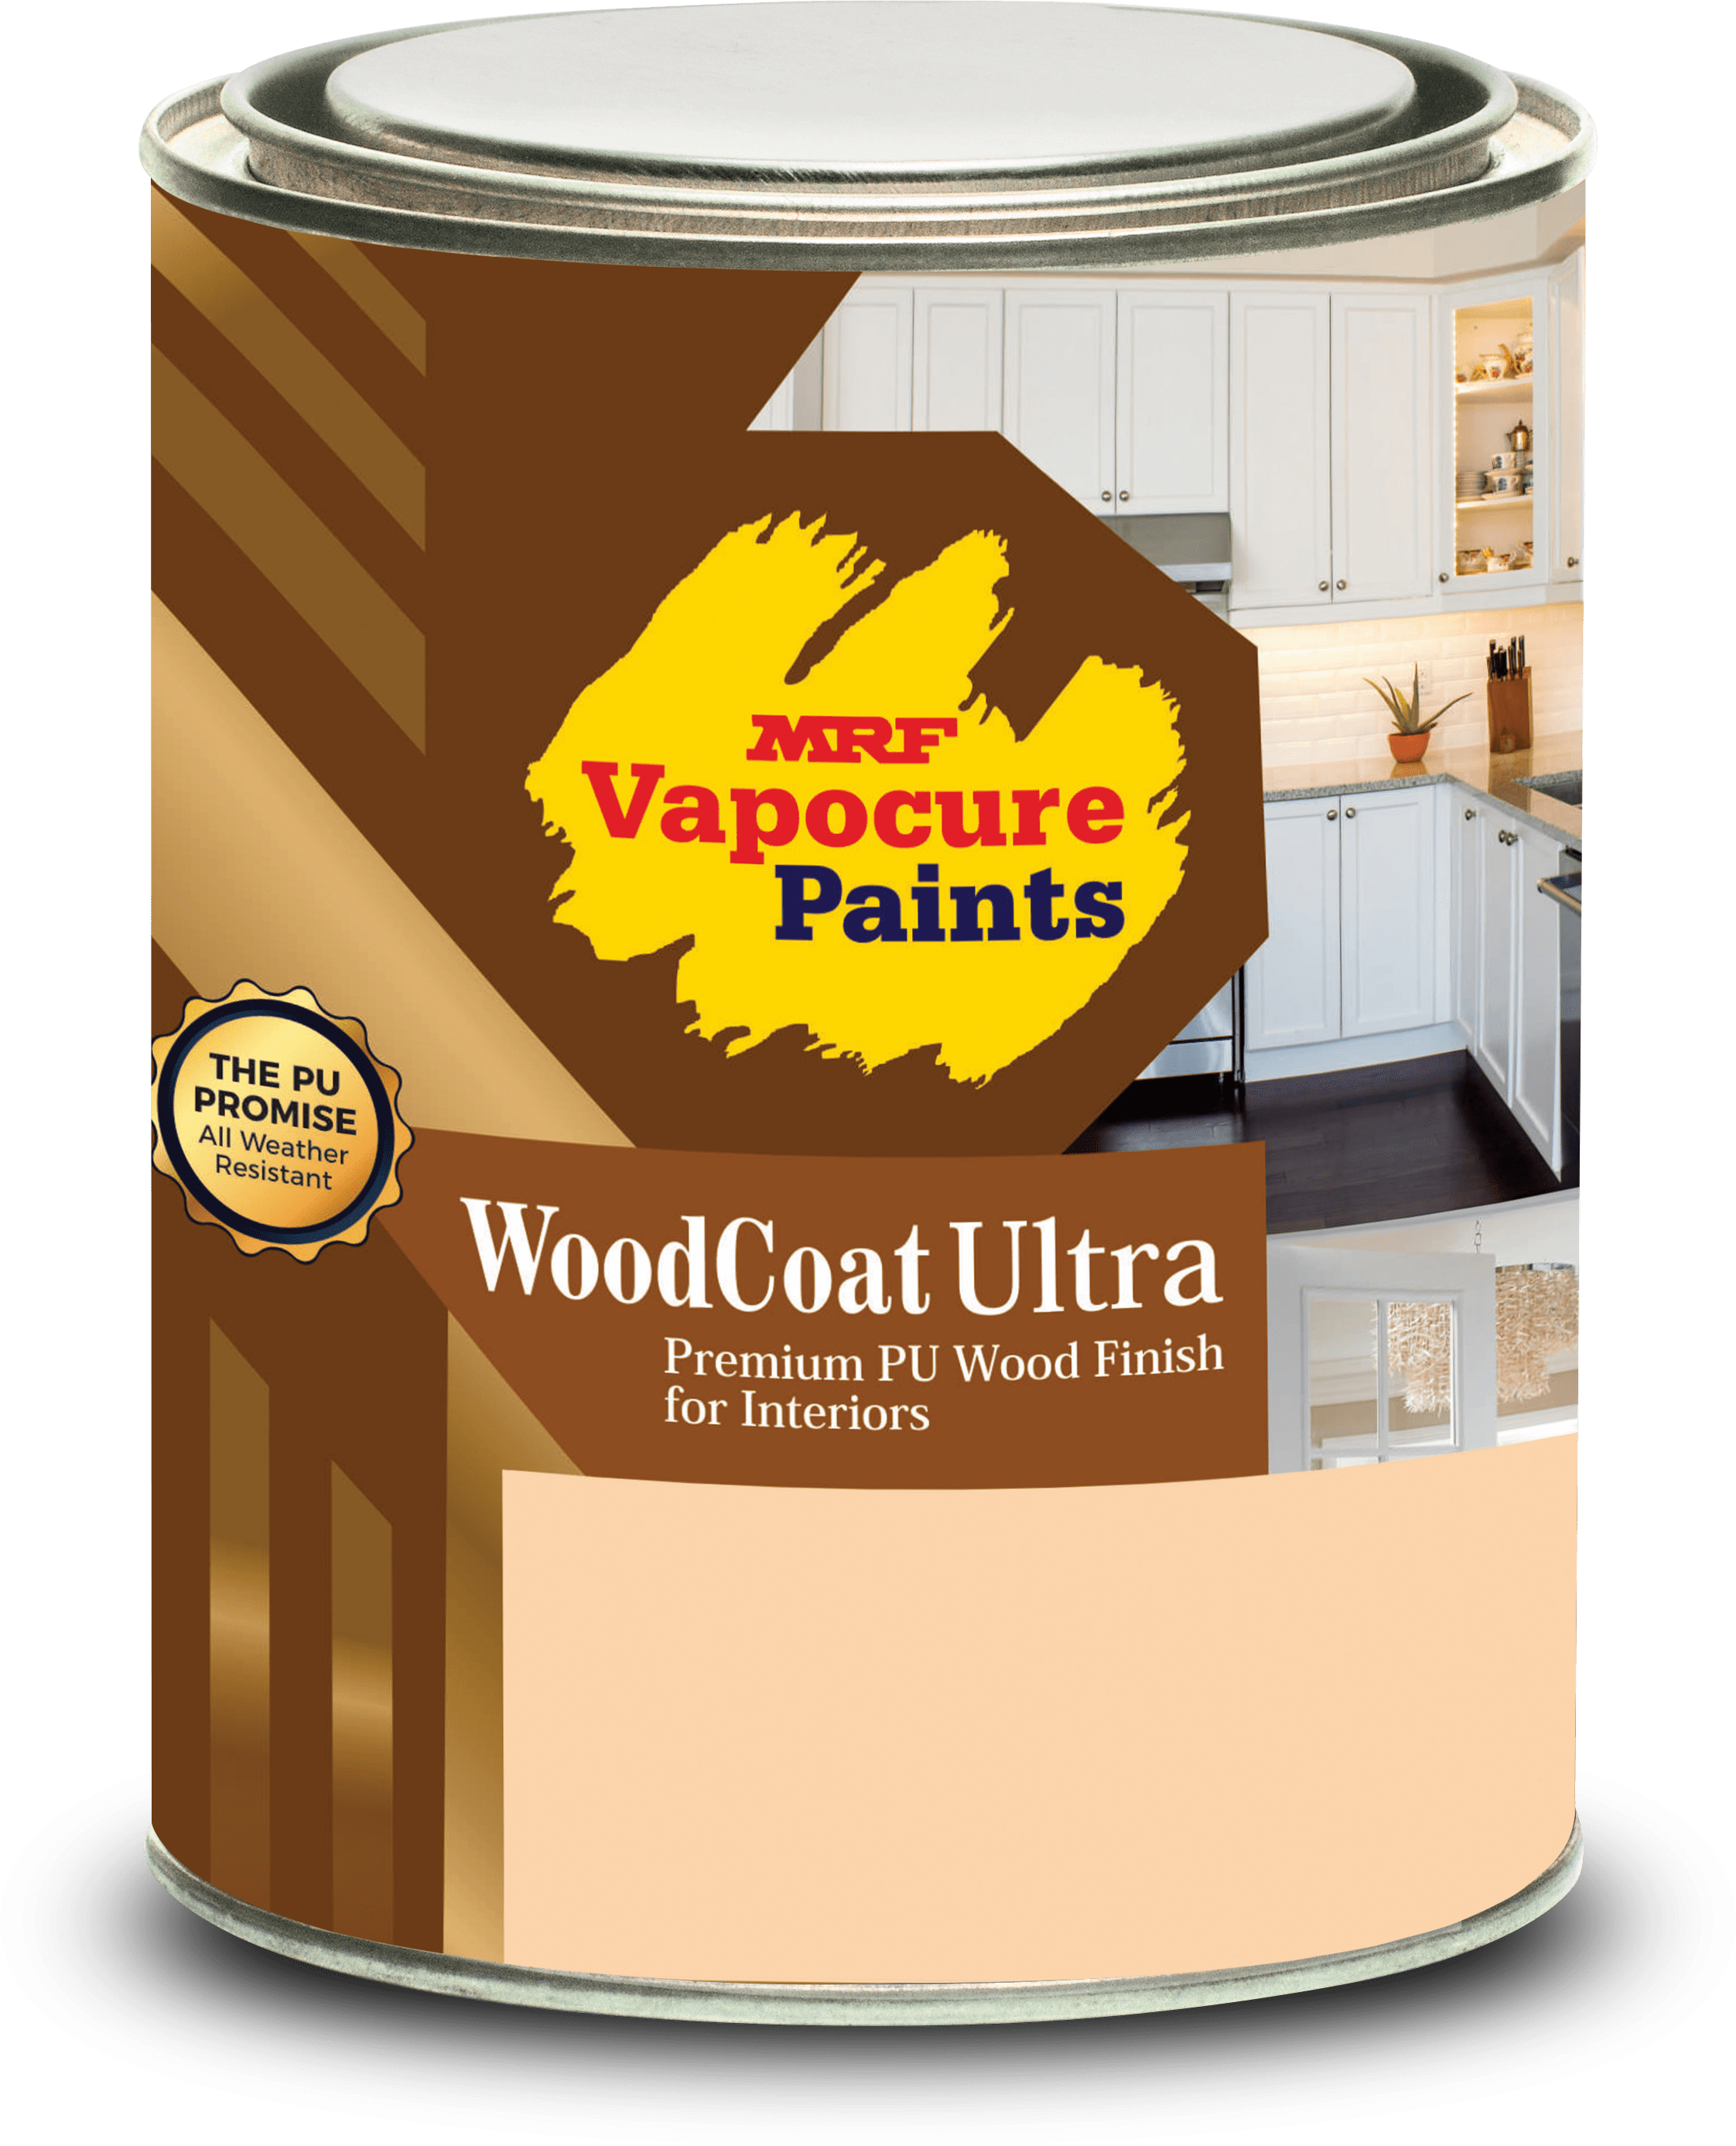 WoodCoat Ultra Interior is a premium fast setting